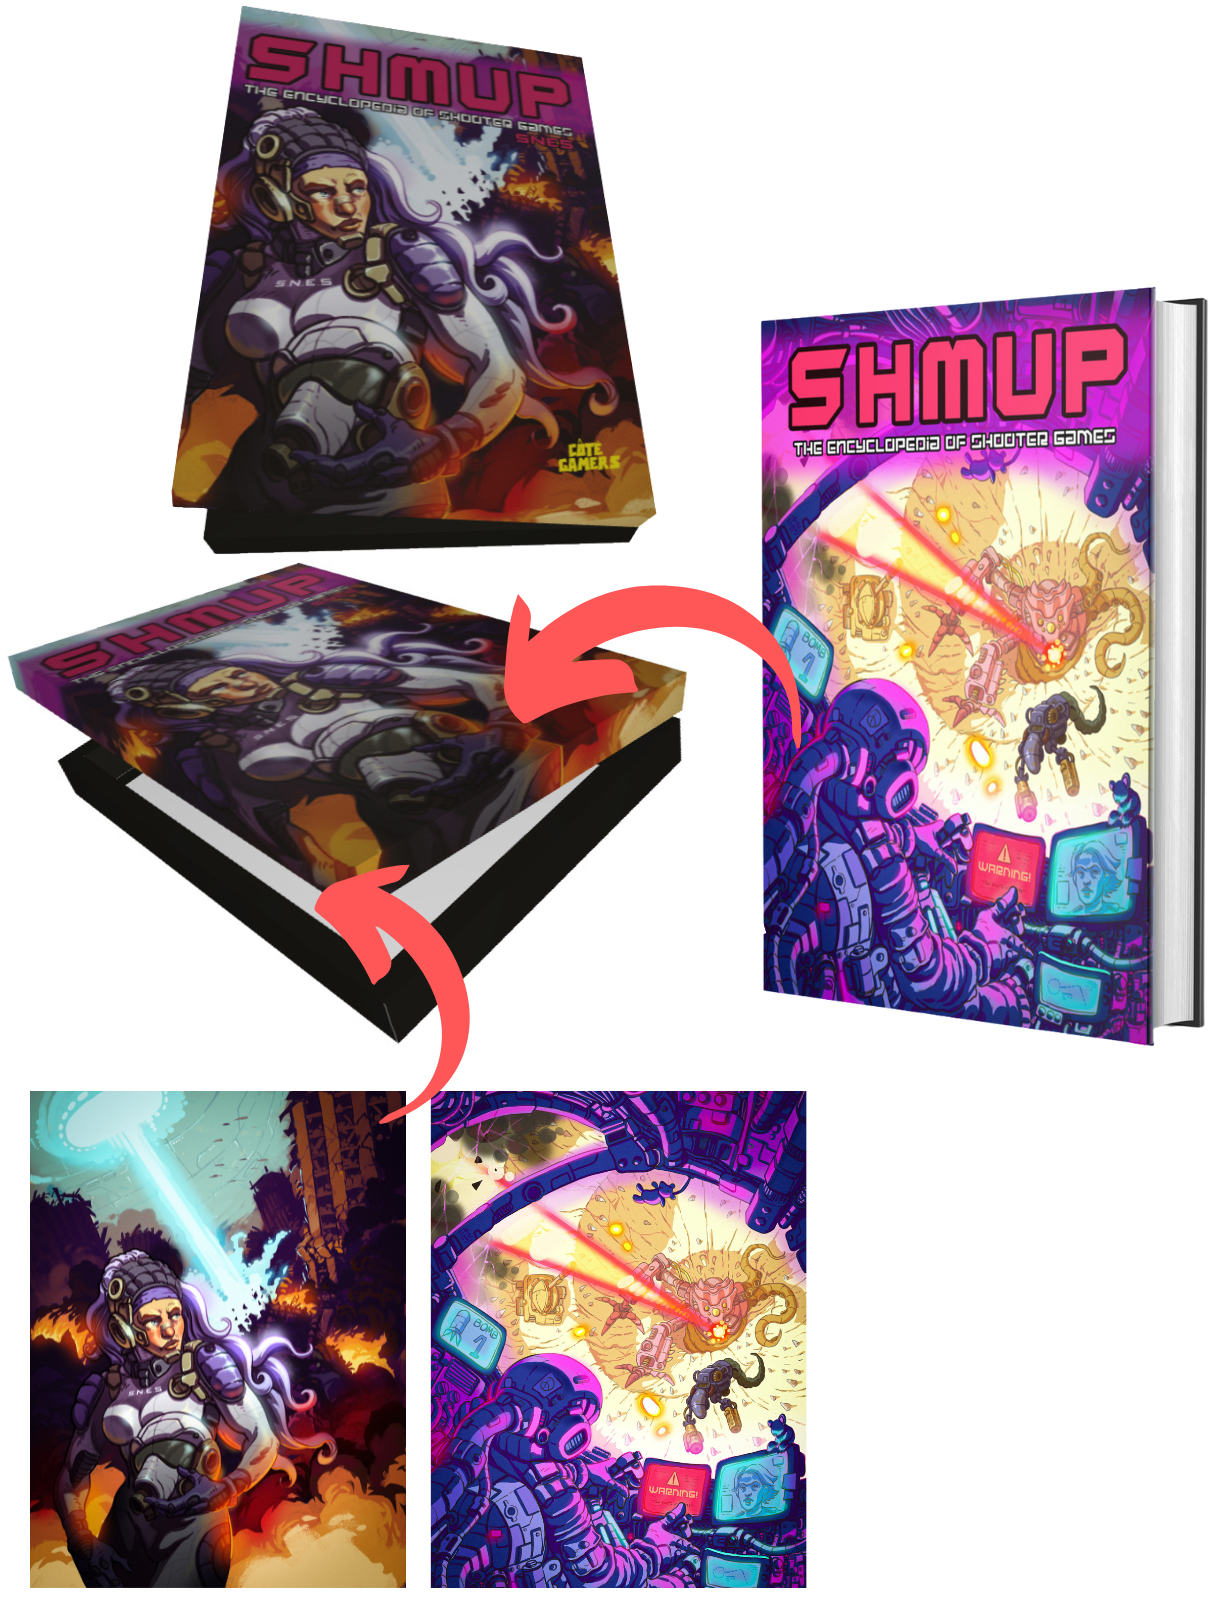 Shmup Deluxe Box content, illustrations